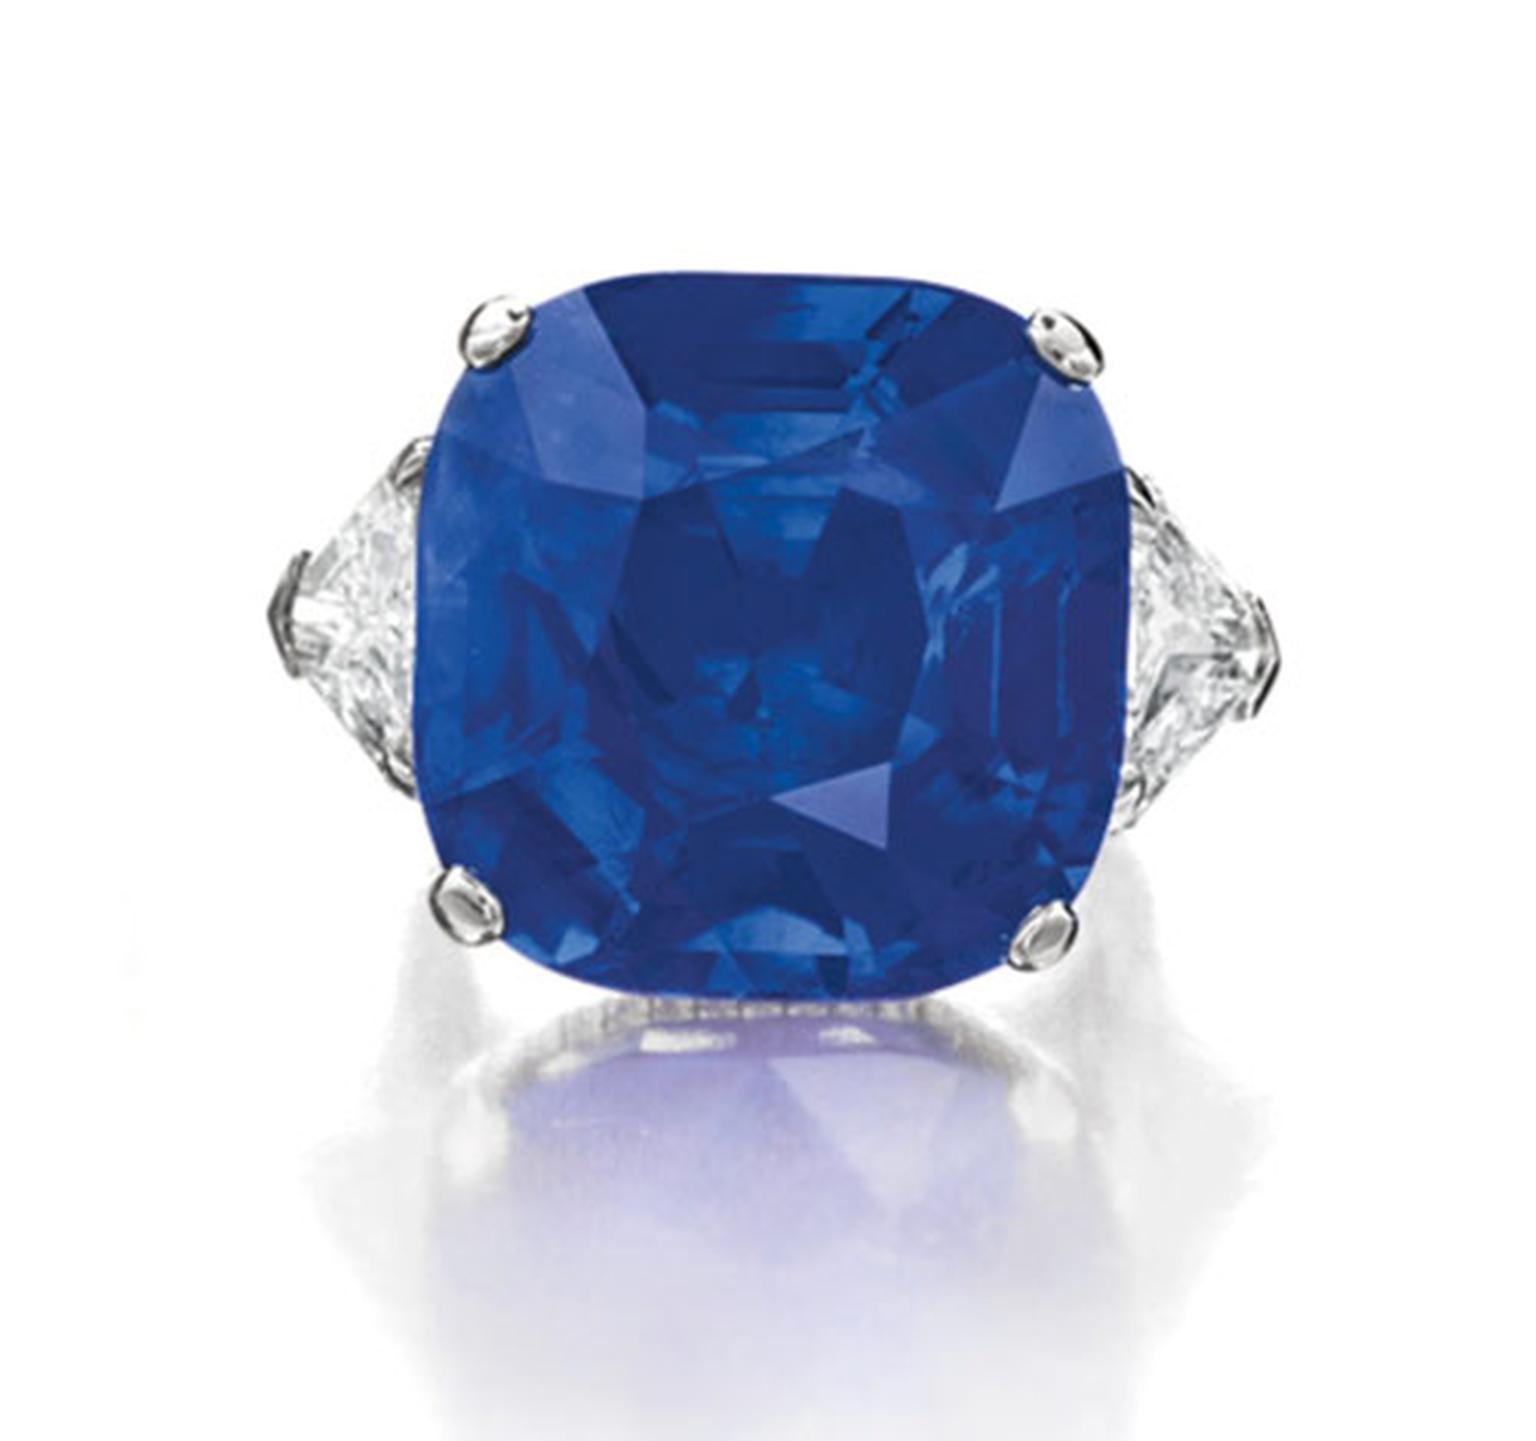 Christies-Cushion-Cut-Burmese-Sapphire-Diamond-Ring